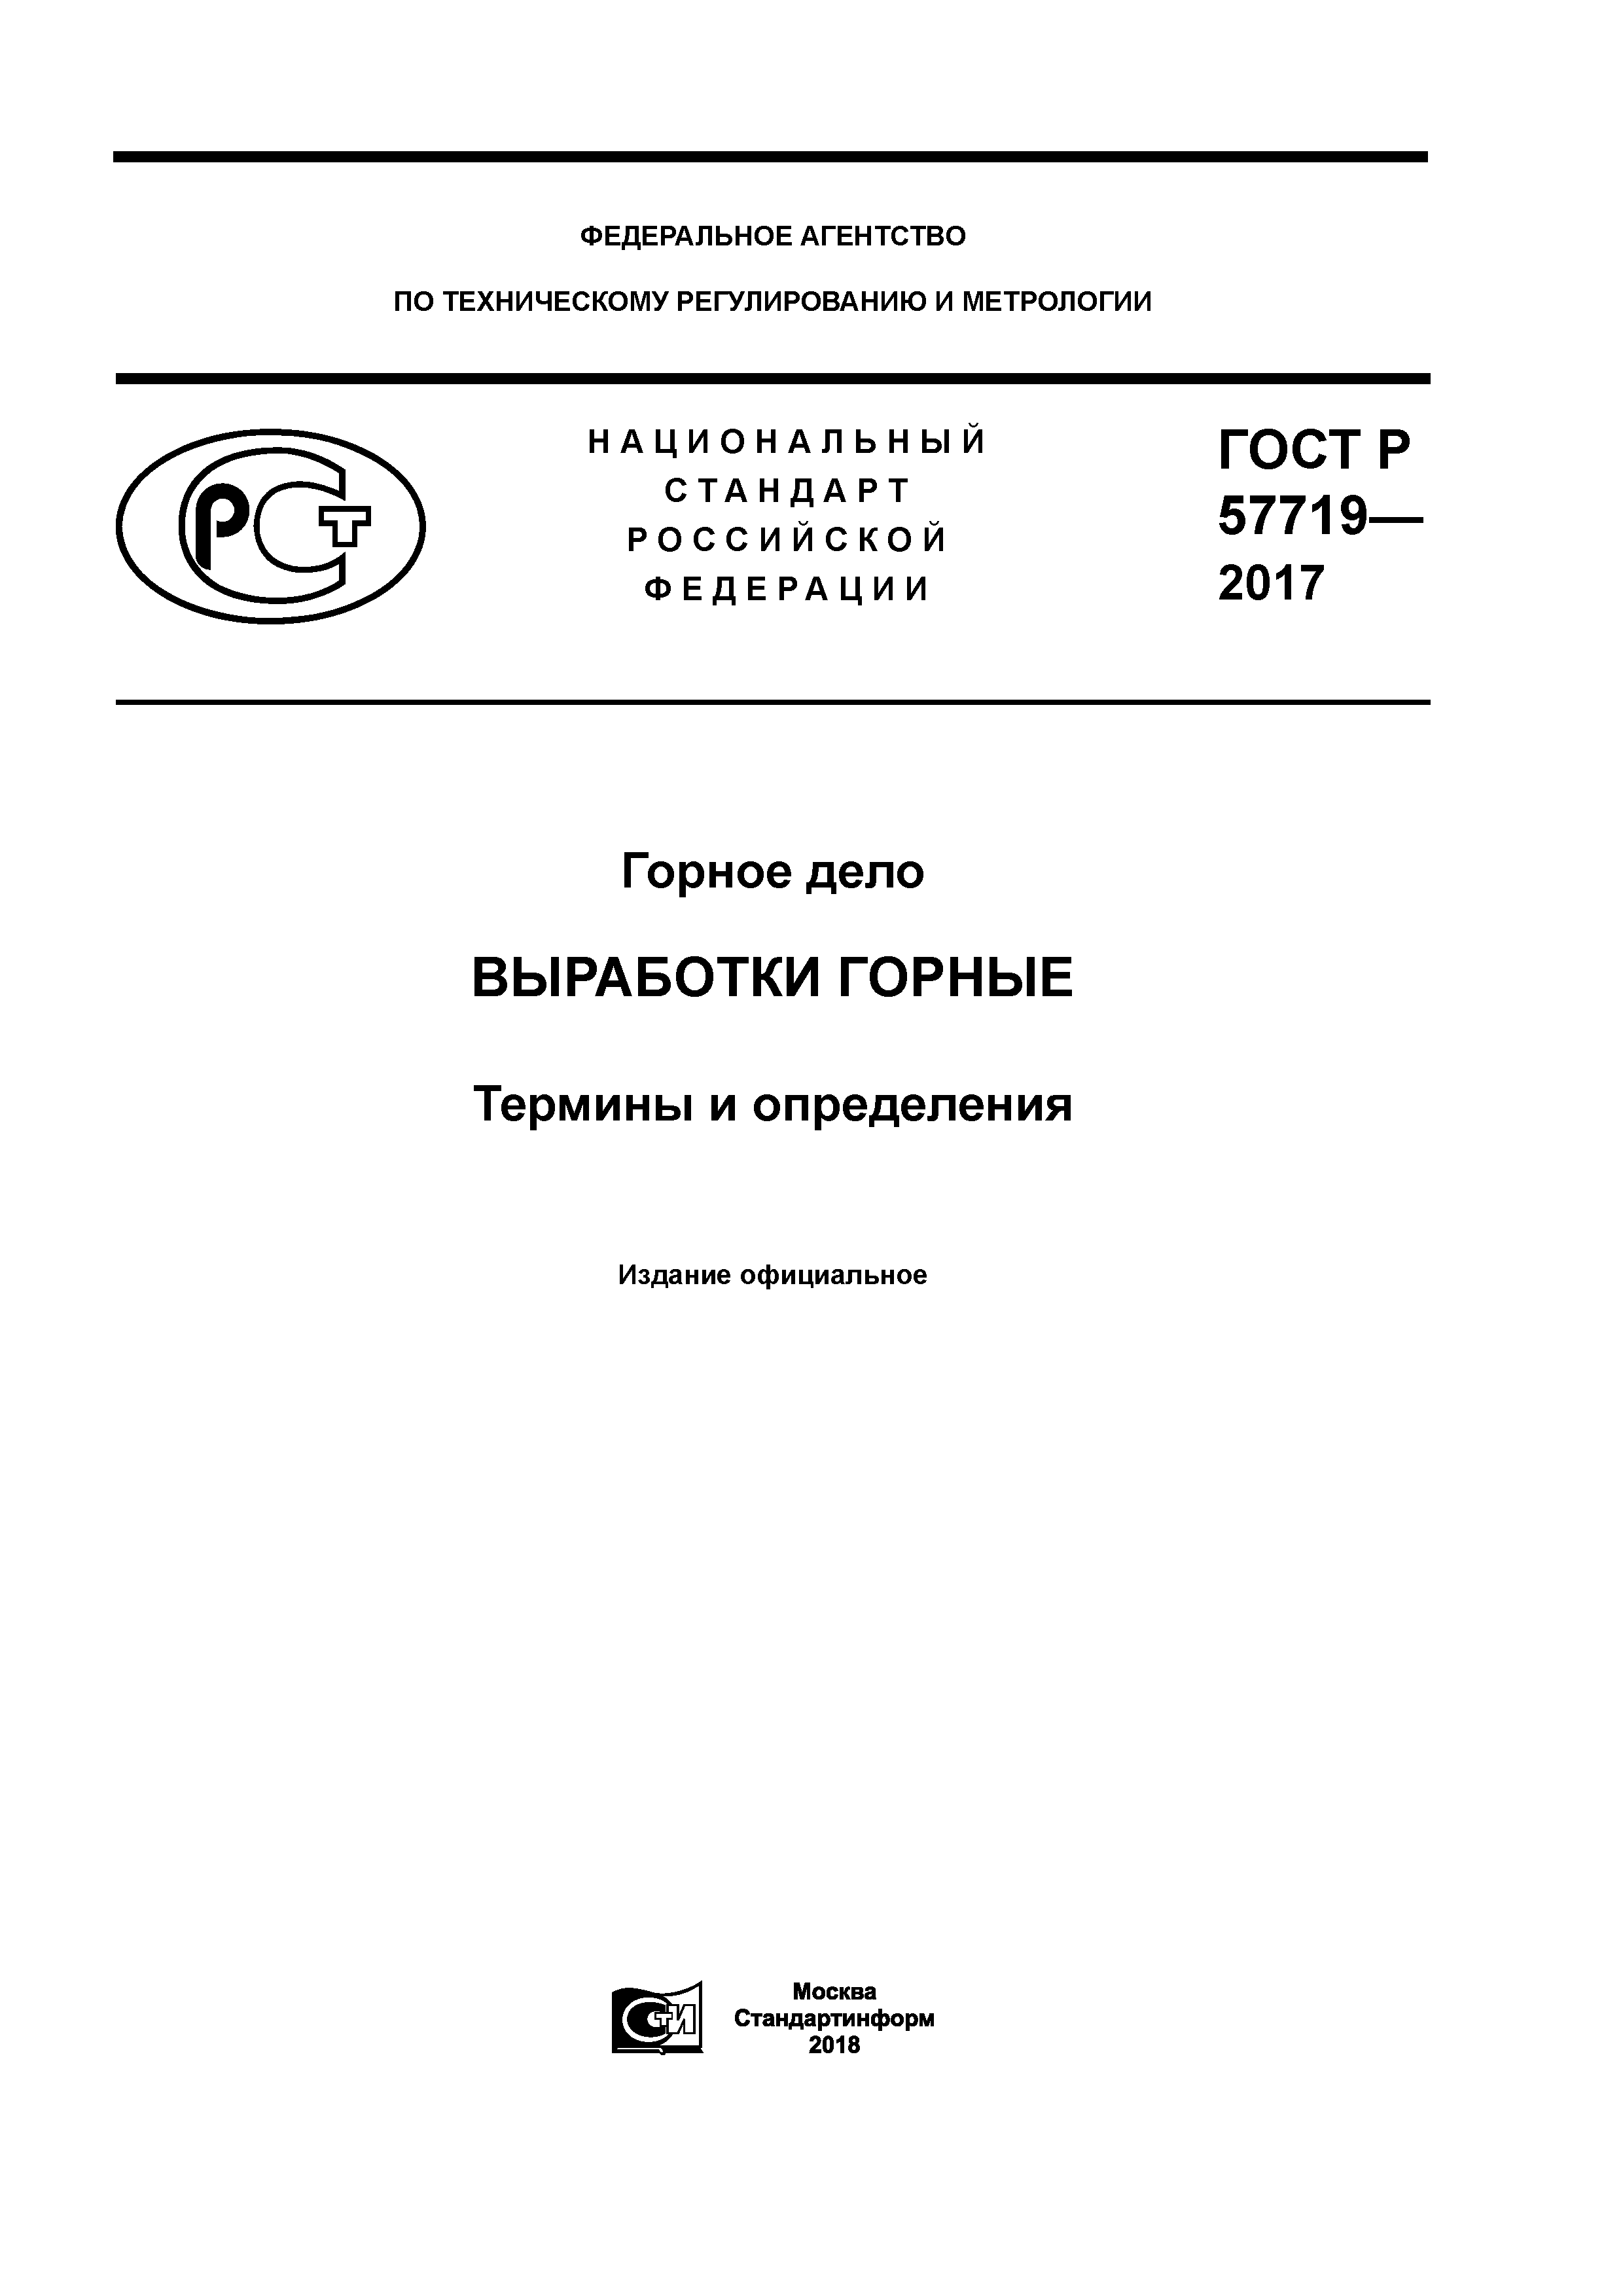 ГОСТ Р 57719-2017